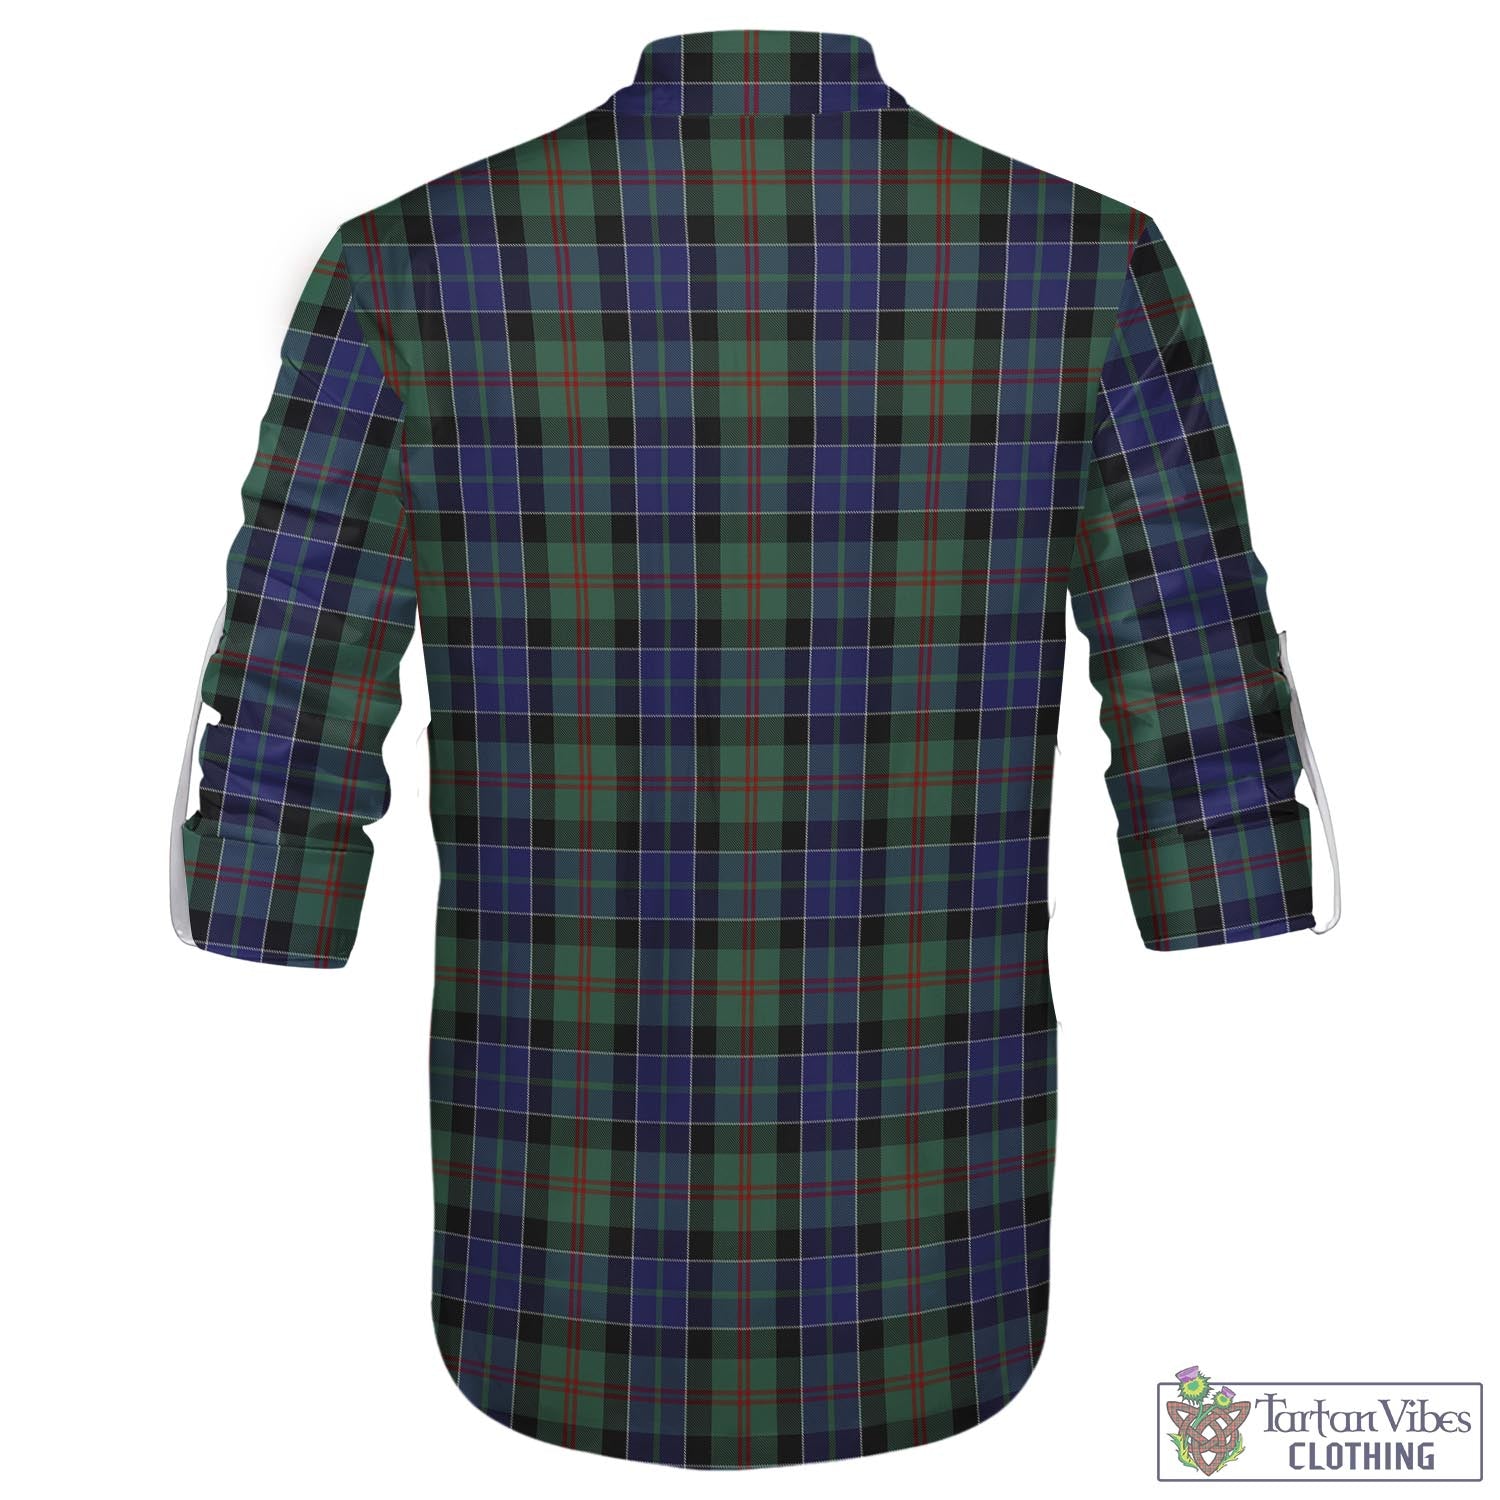 Tartan Vibes Clothing McFadzen 02 Tartan Men's Scottish Traditional Jacobite Ghillie Kilt Shirt with Family Crest